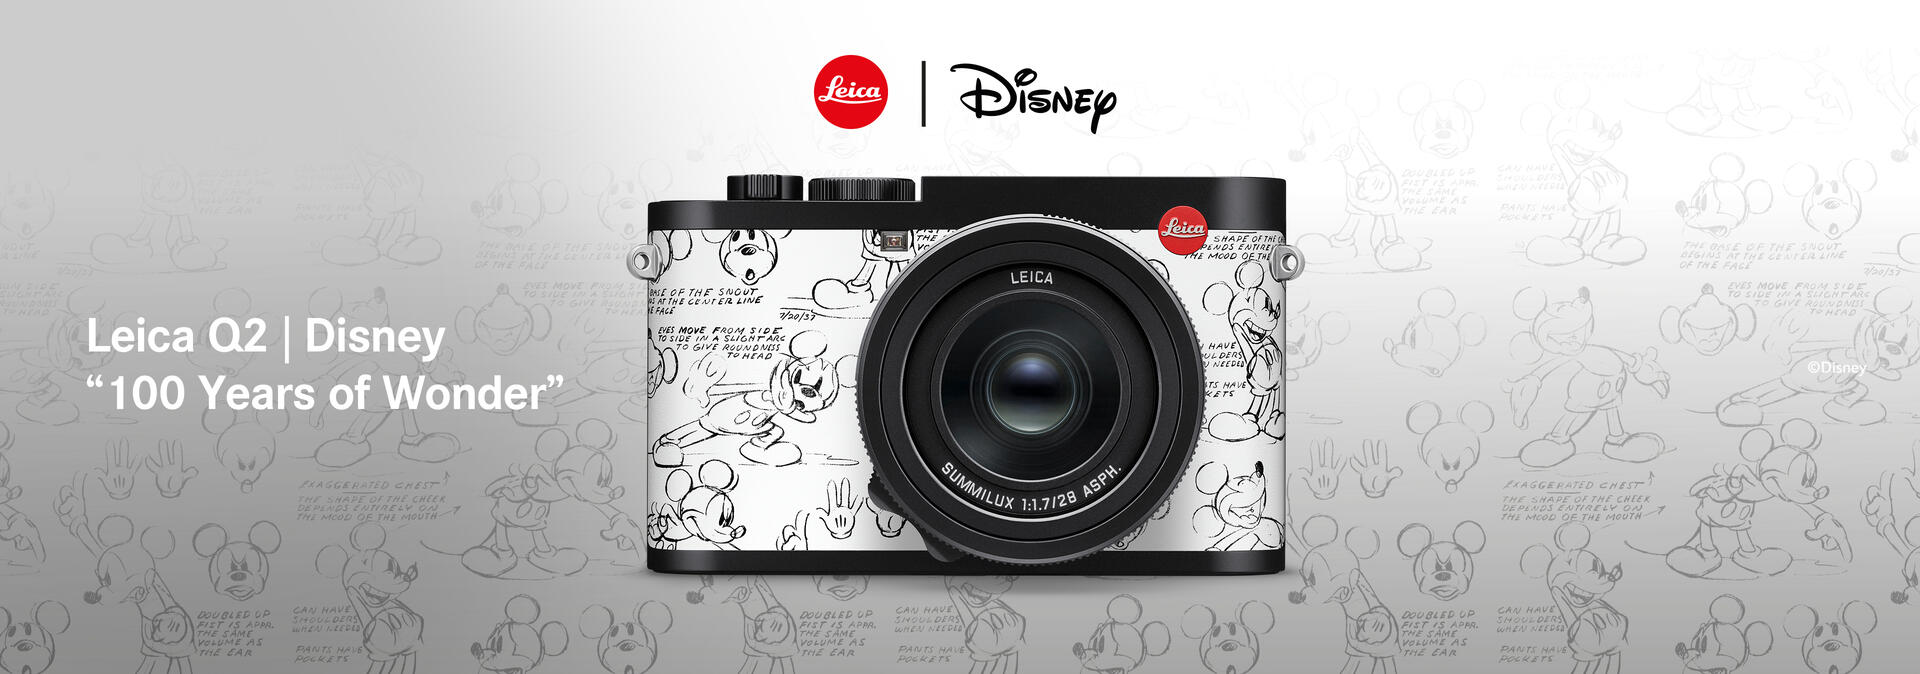 Leica Q2 | Disney “100 Years of Wonder” | Leica Camera JP